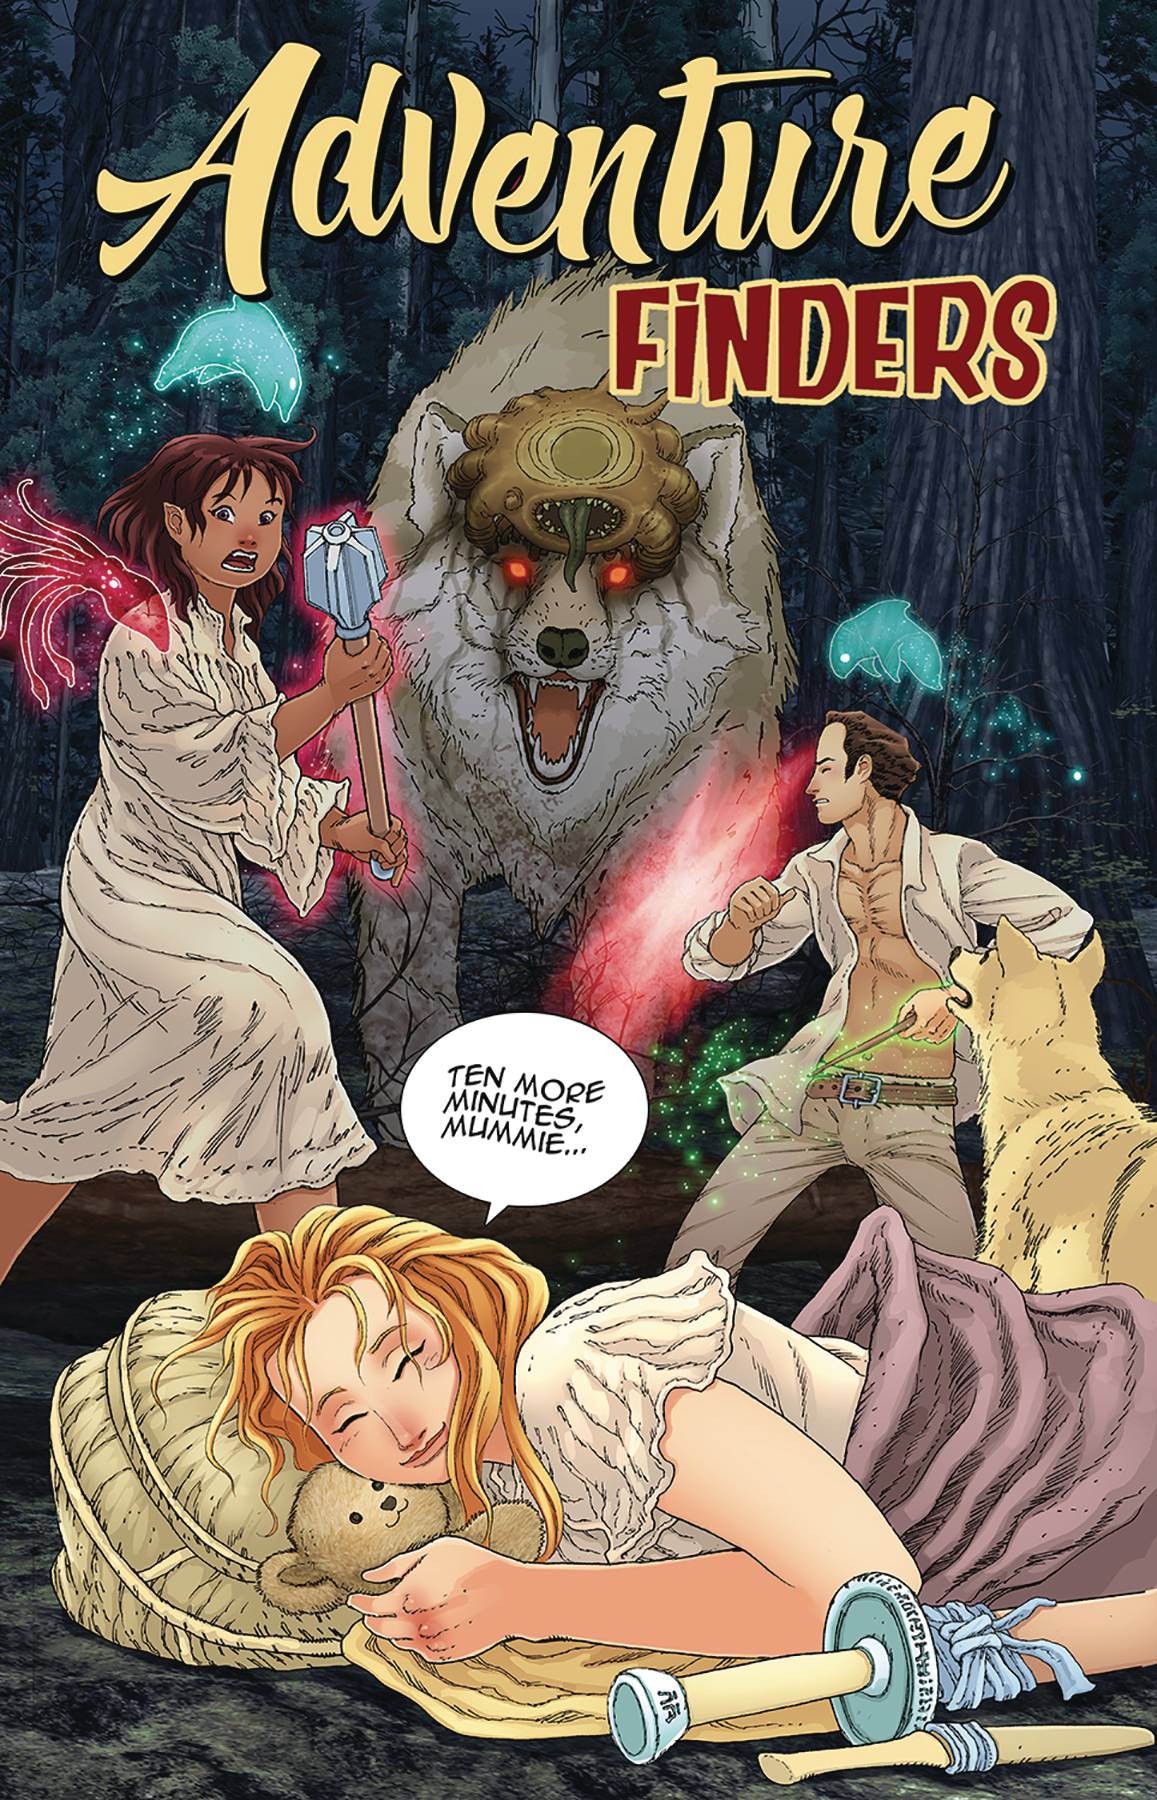 Adventure Finders 3 Comic Book